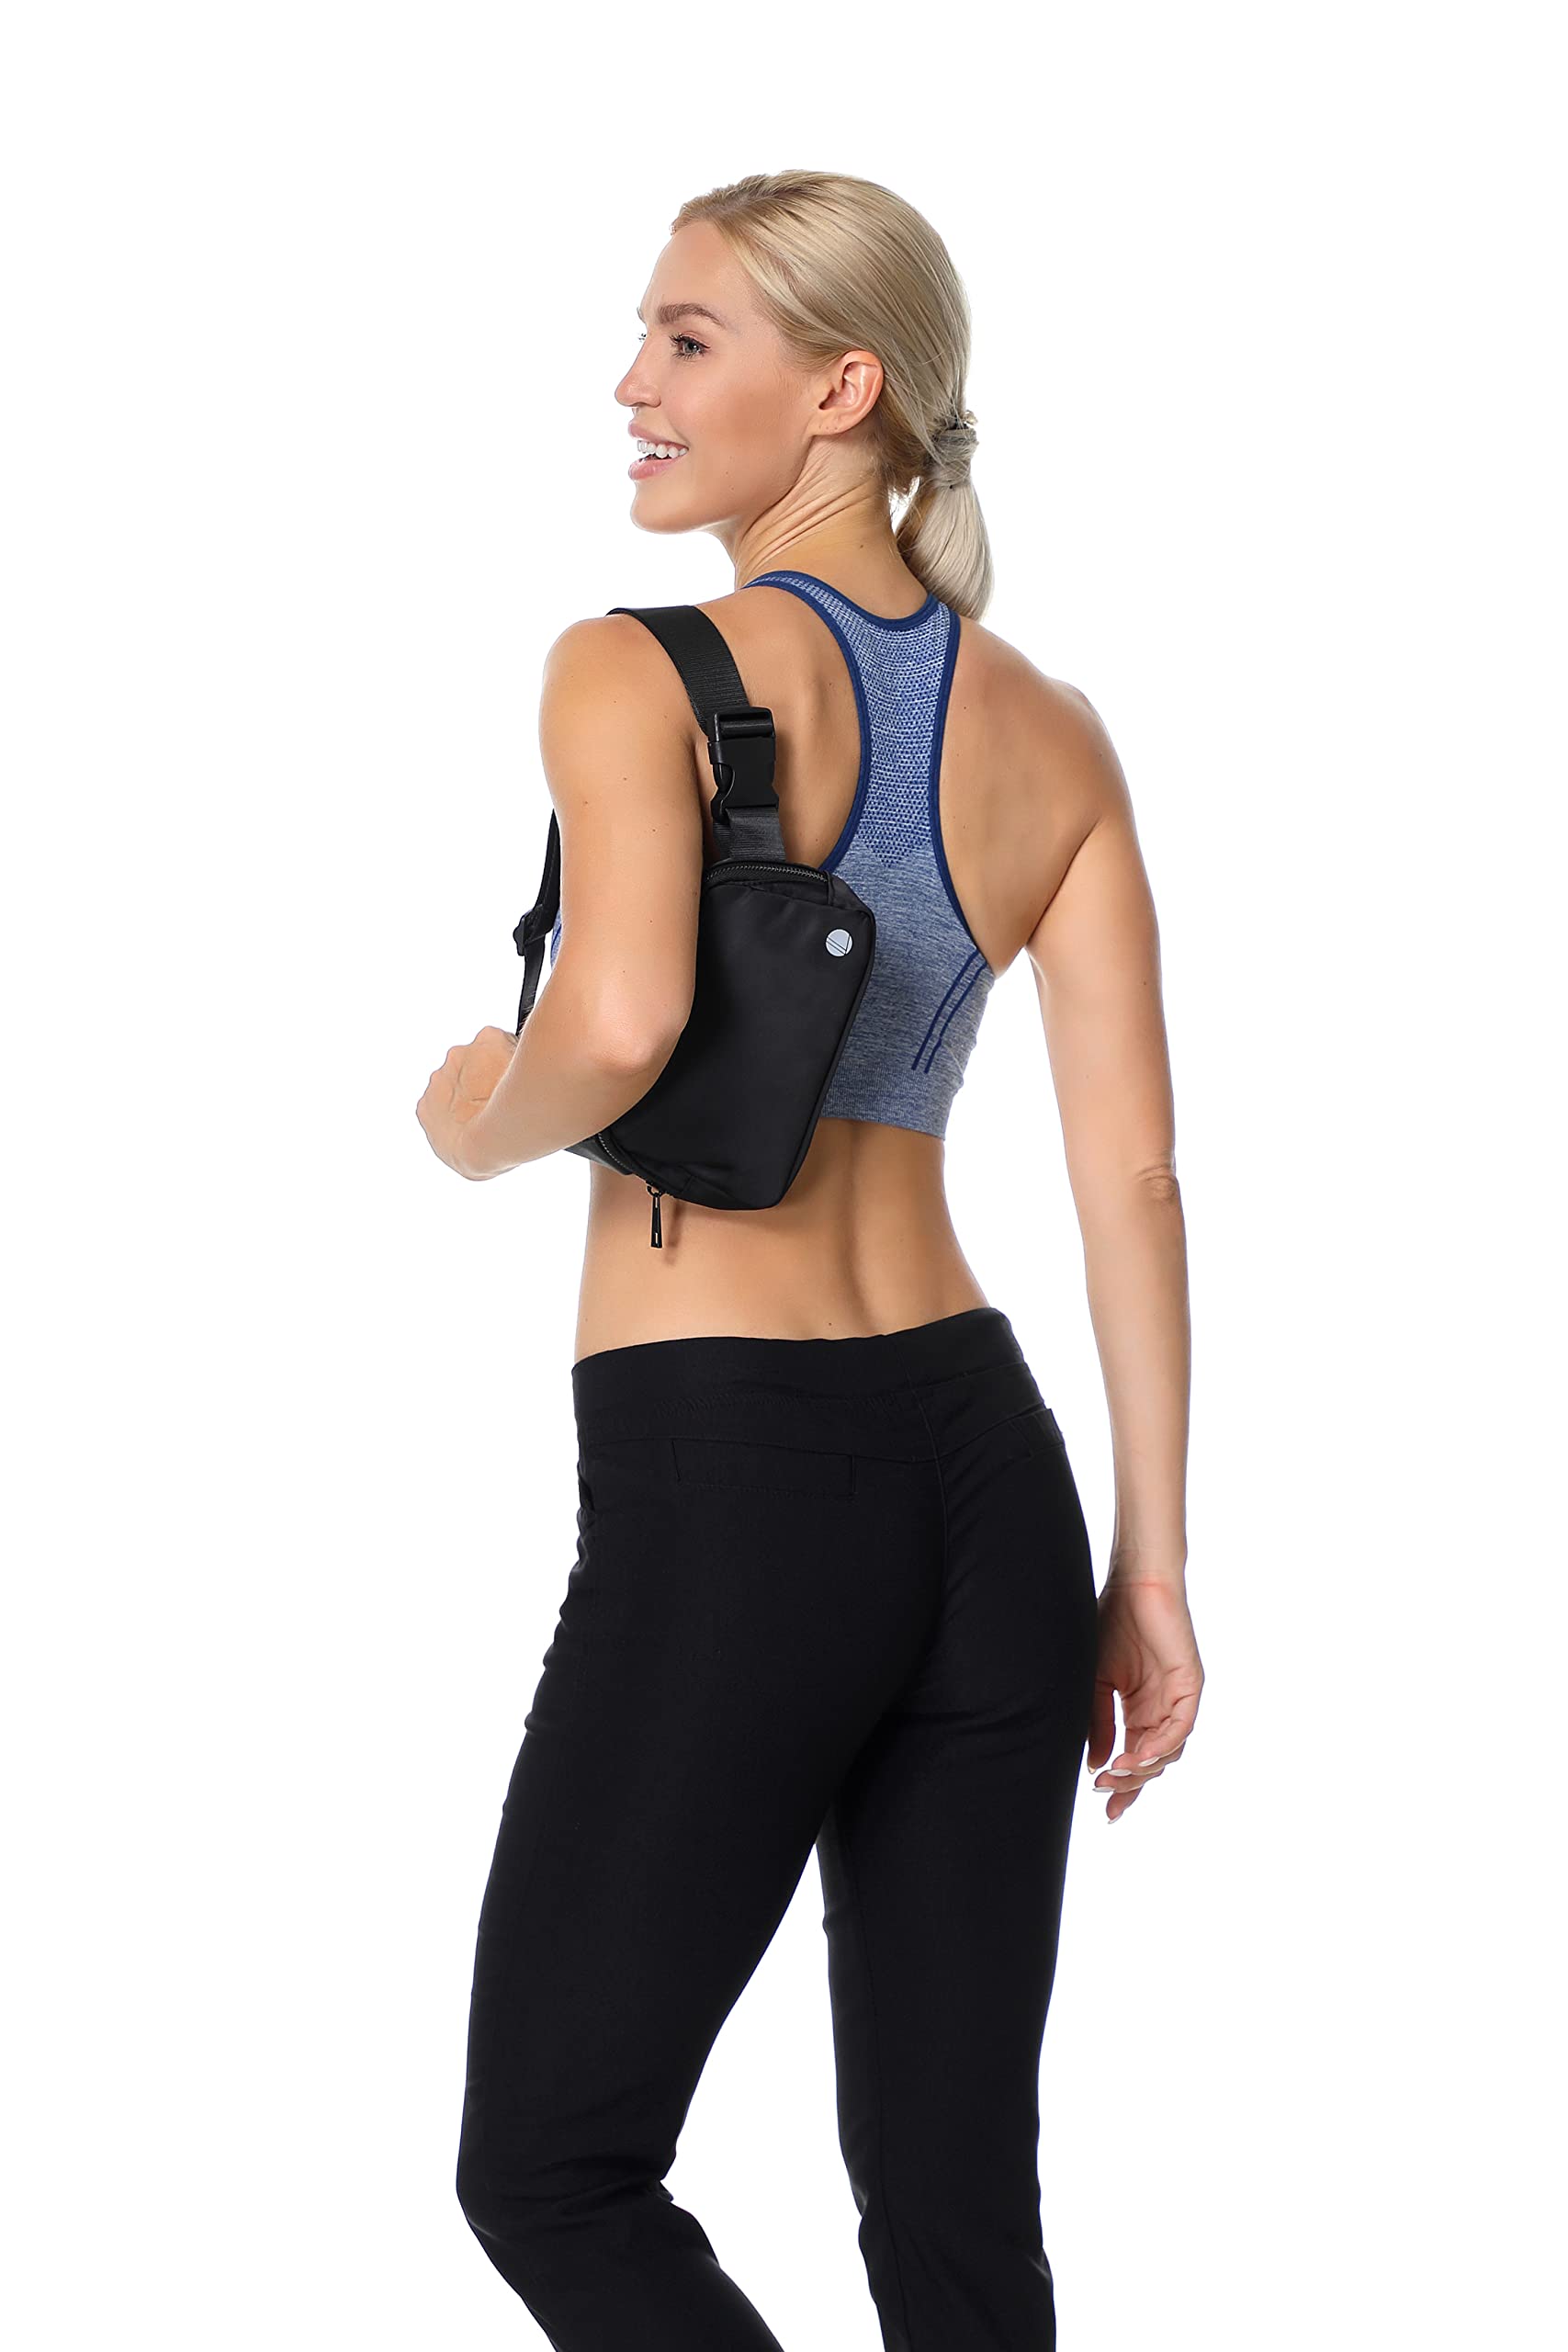 Leotruny Unisex Belt Bag Everywhere Waist Pack Waterproof for Travel Running Hiking (C01-Black)